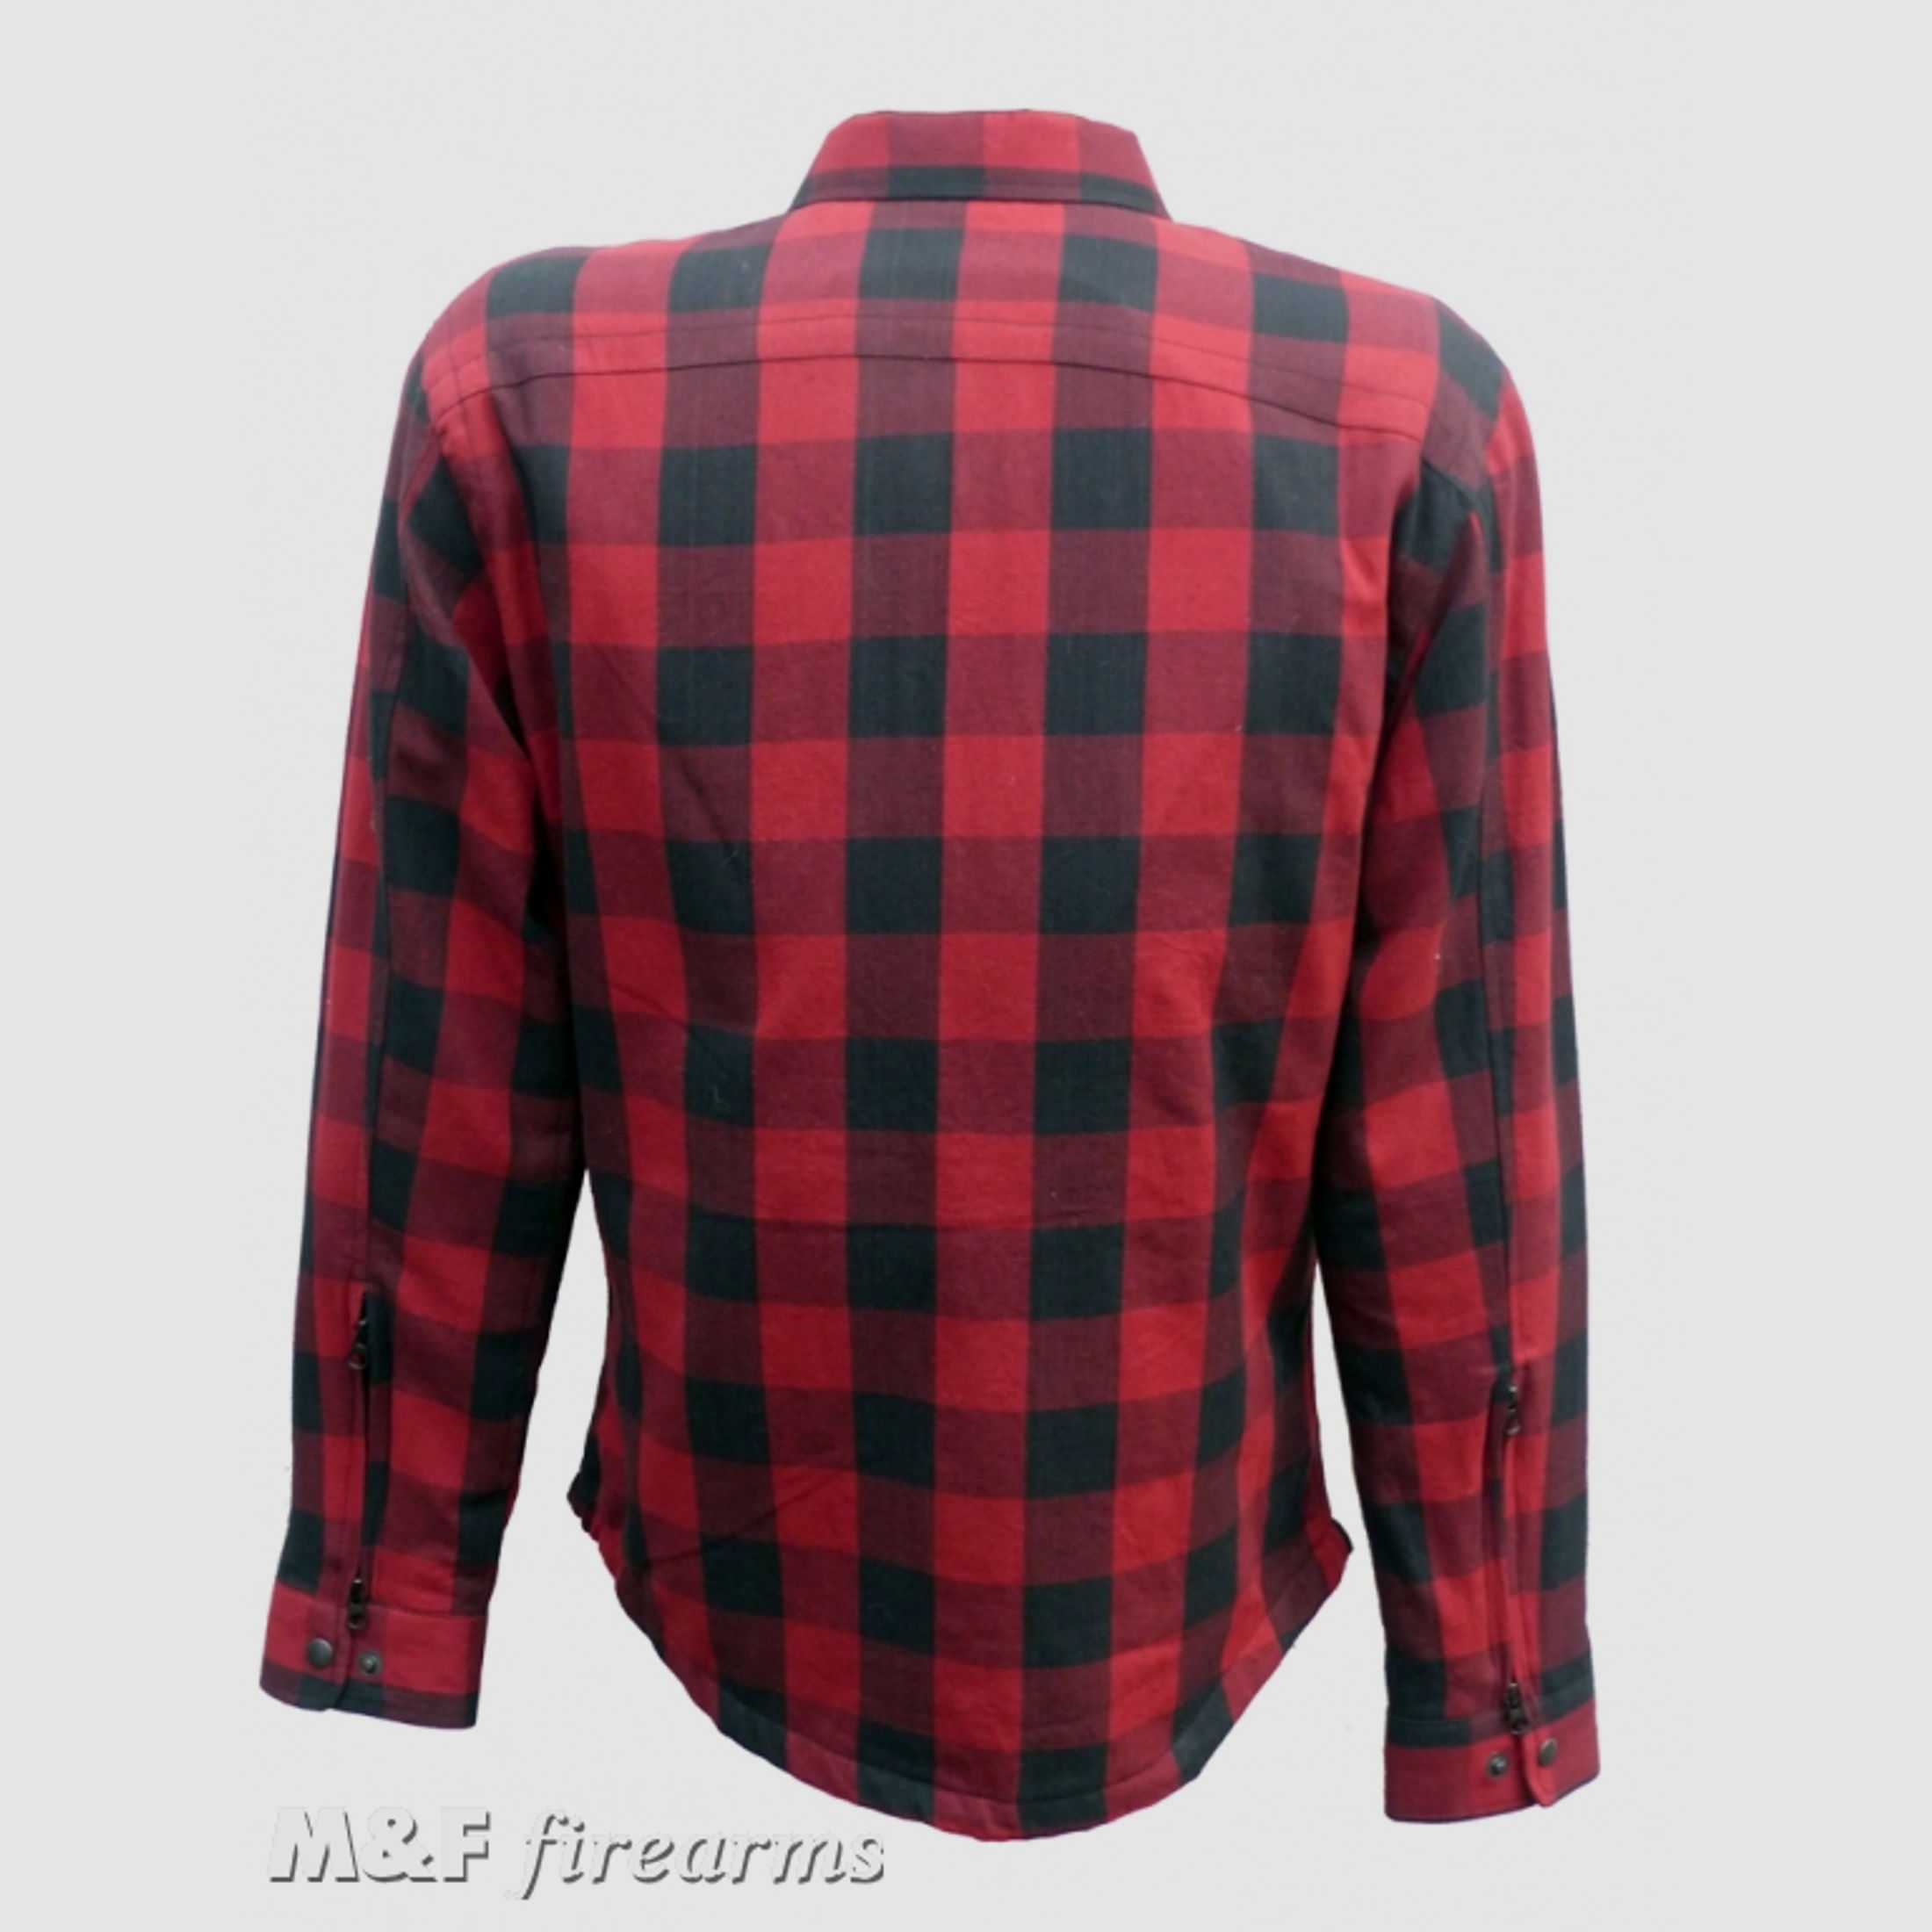 Lumberjack Shirt im Holzfäller-Stil mit herausnehmbarem Innenfutter Protektoren und Aramidfaserverstärkung Rot-Schwarz